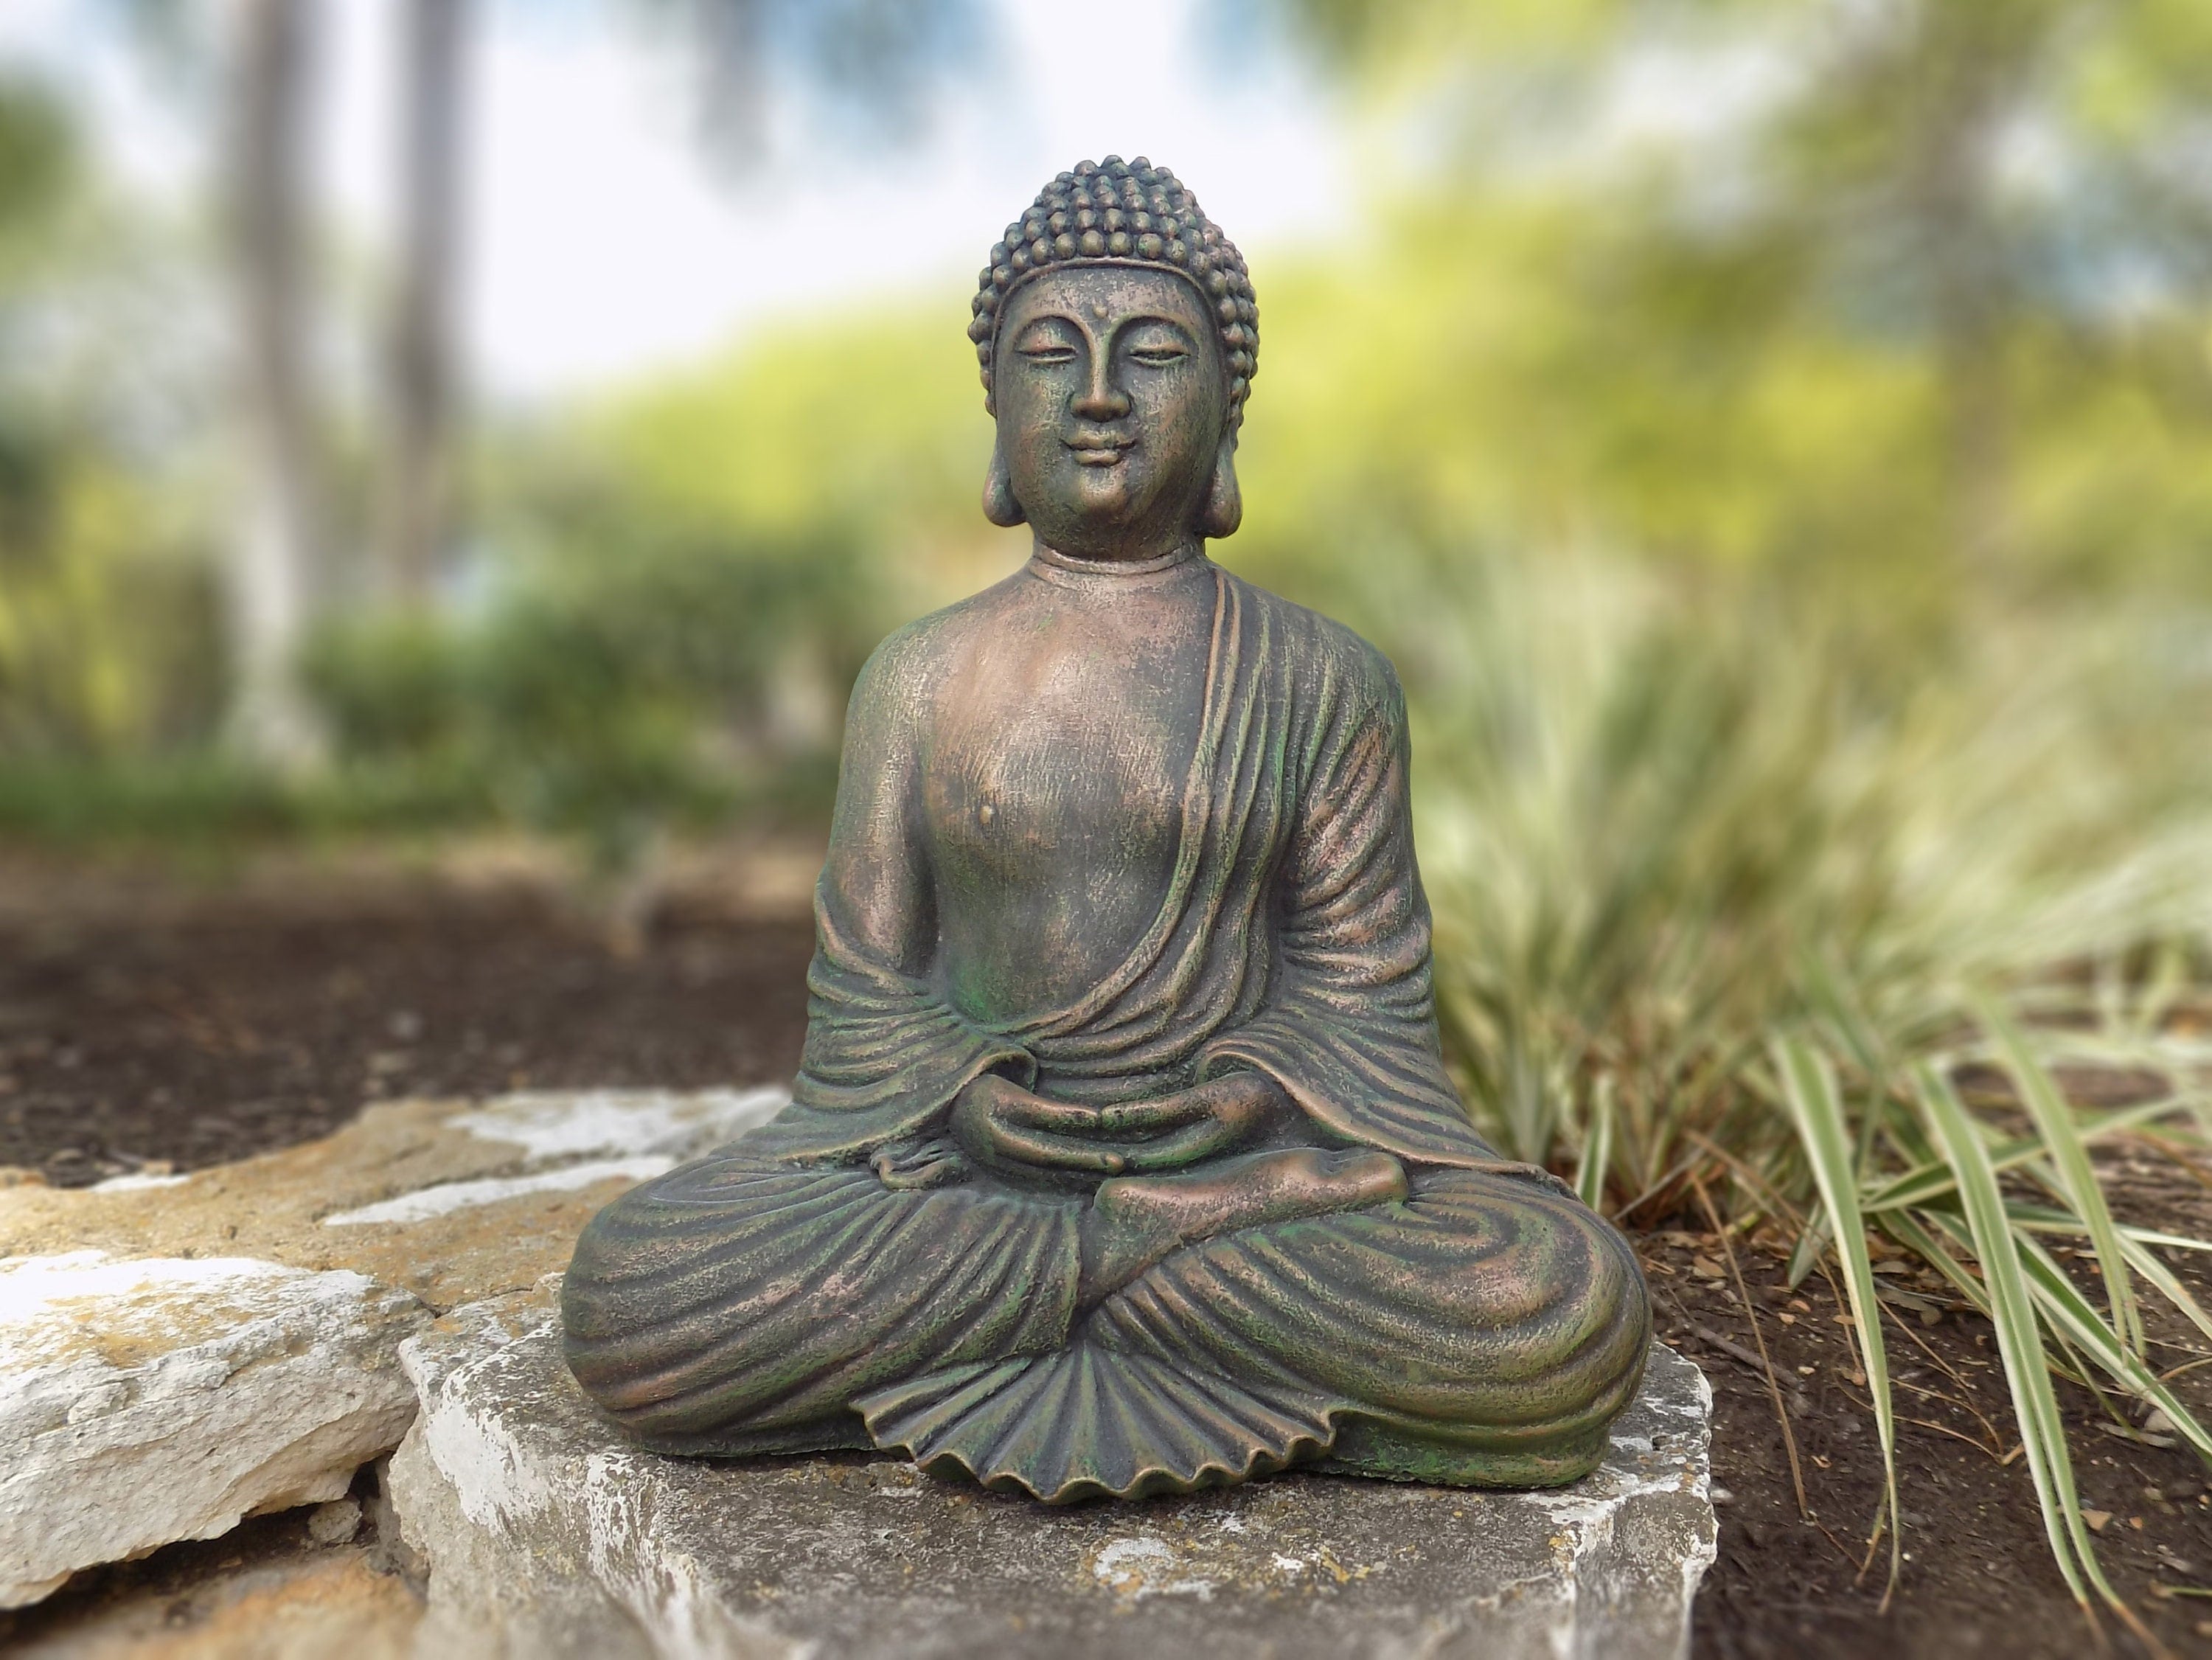 Meditation Buddha Buddha, Copper Statue Zen Etsy Buddha, Concrete Garden Buddha, Cement Concrete Home Decor, Style Garden - or Garden Buddhism